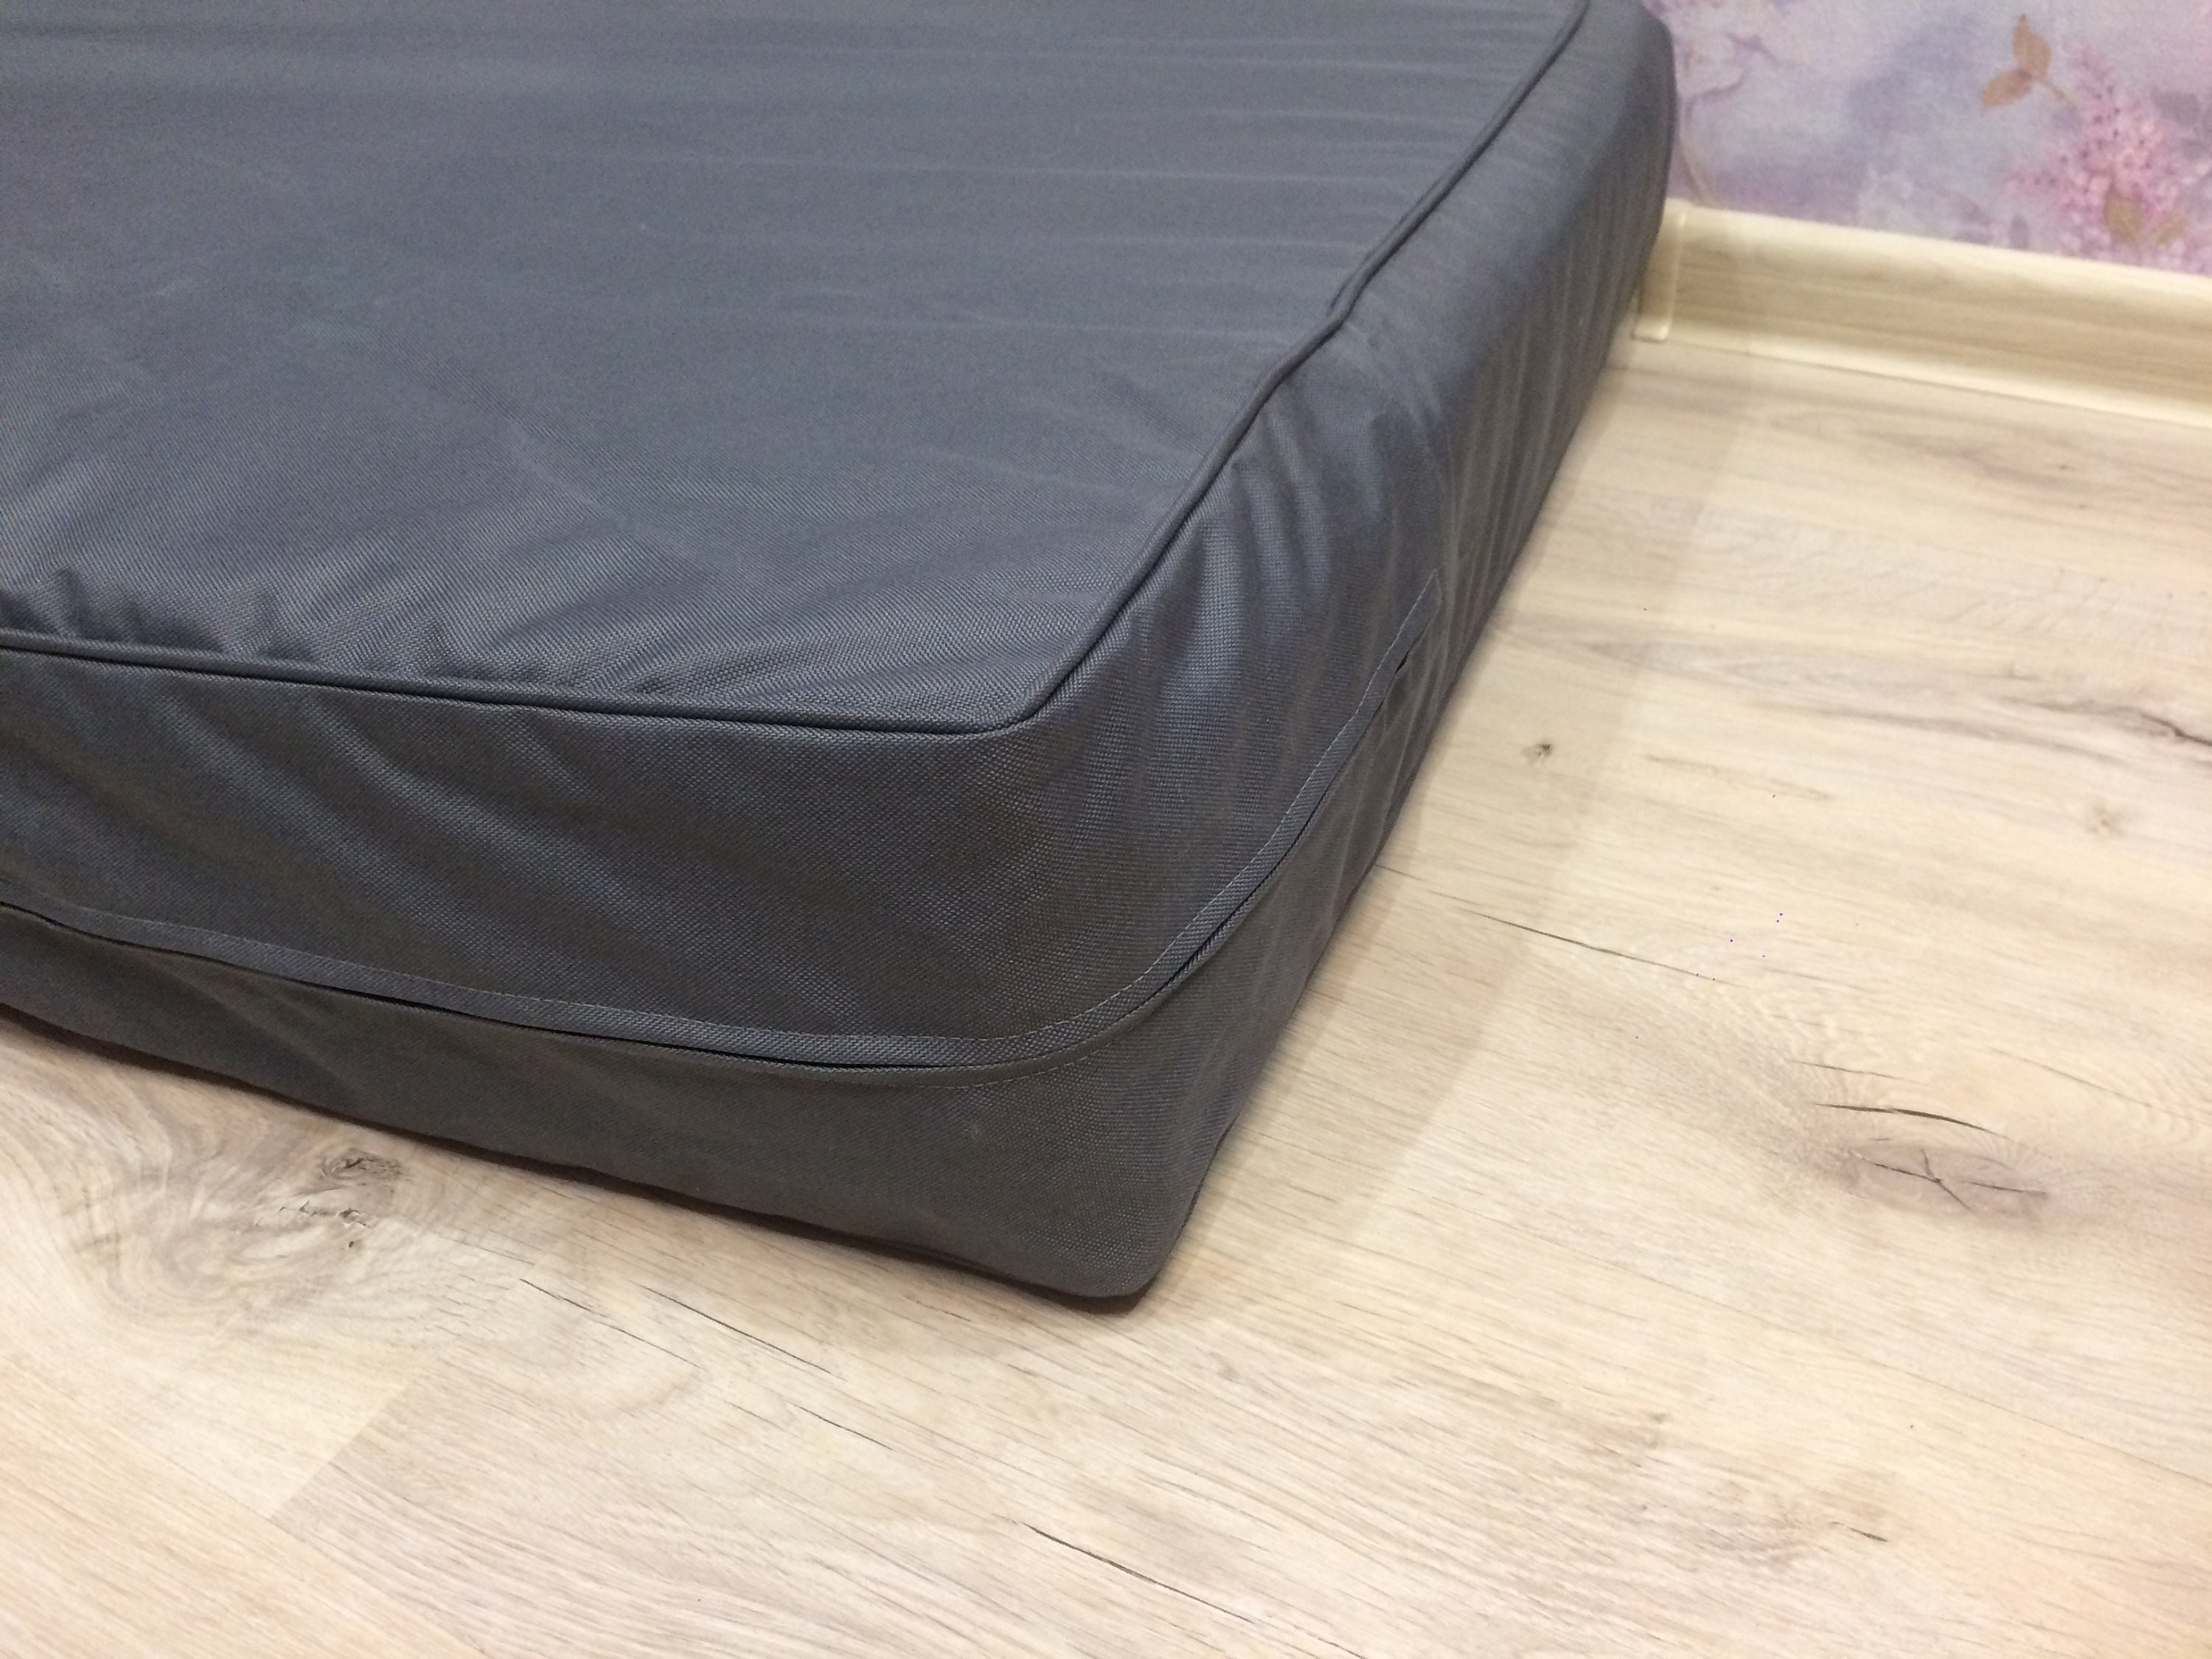 waterproof mattress cover pricelist